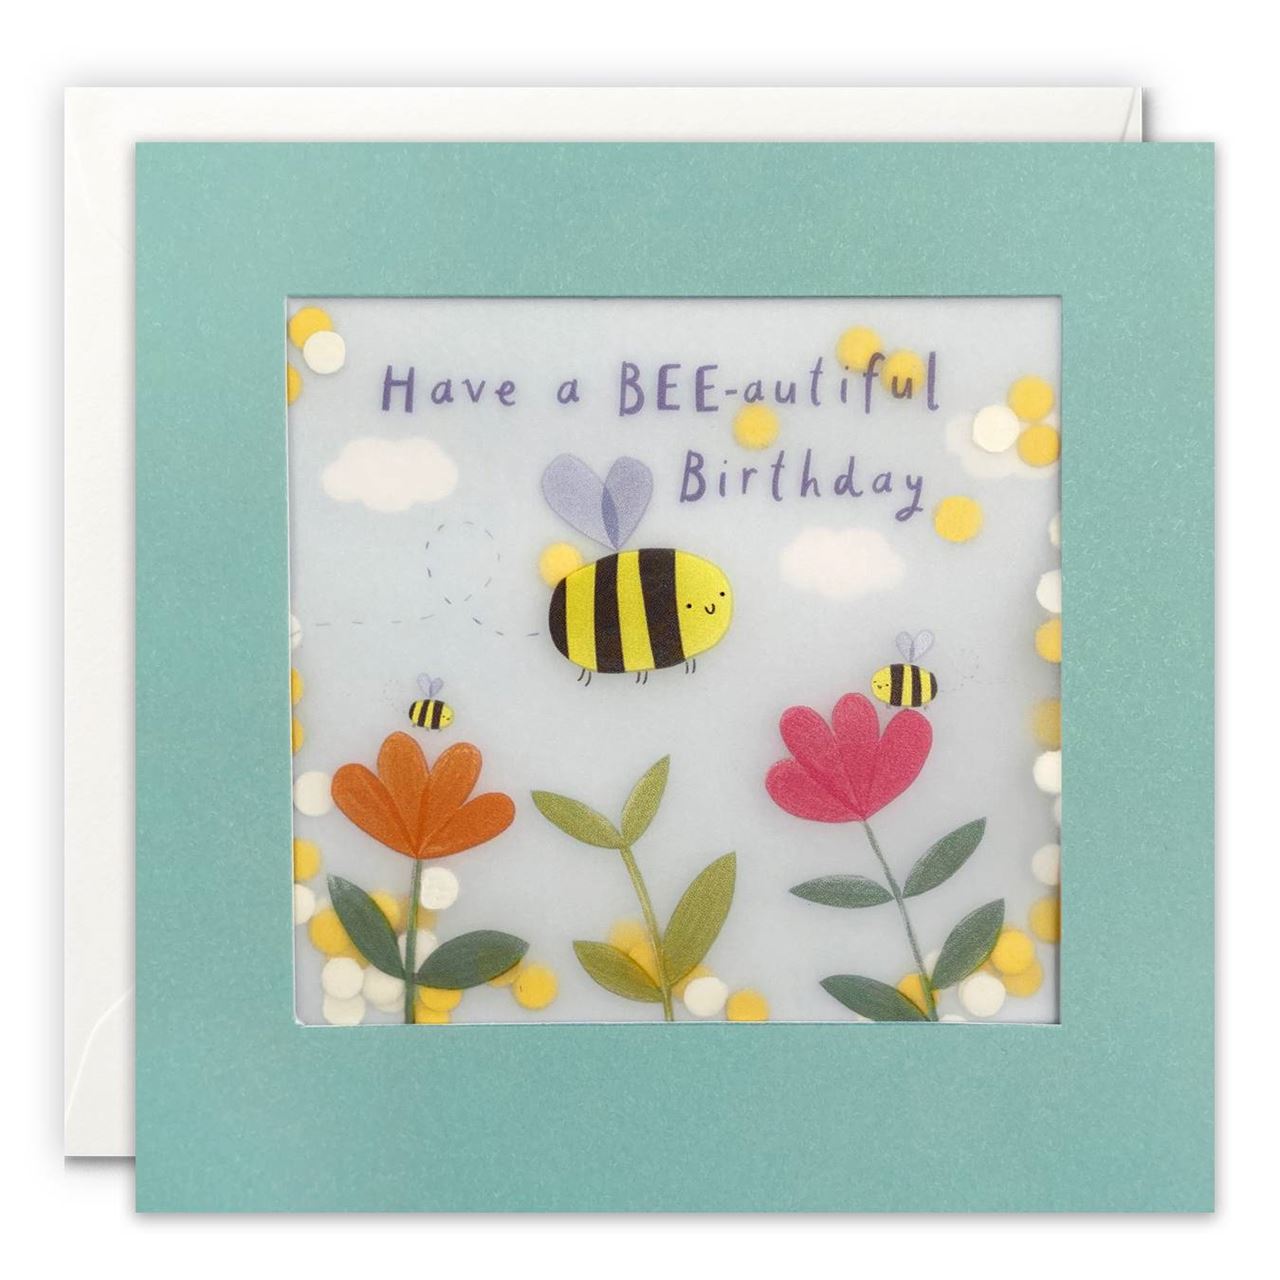 Shakie Birthday Card | Bee-Eautiful Birthday